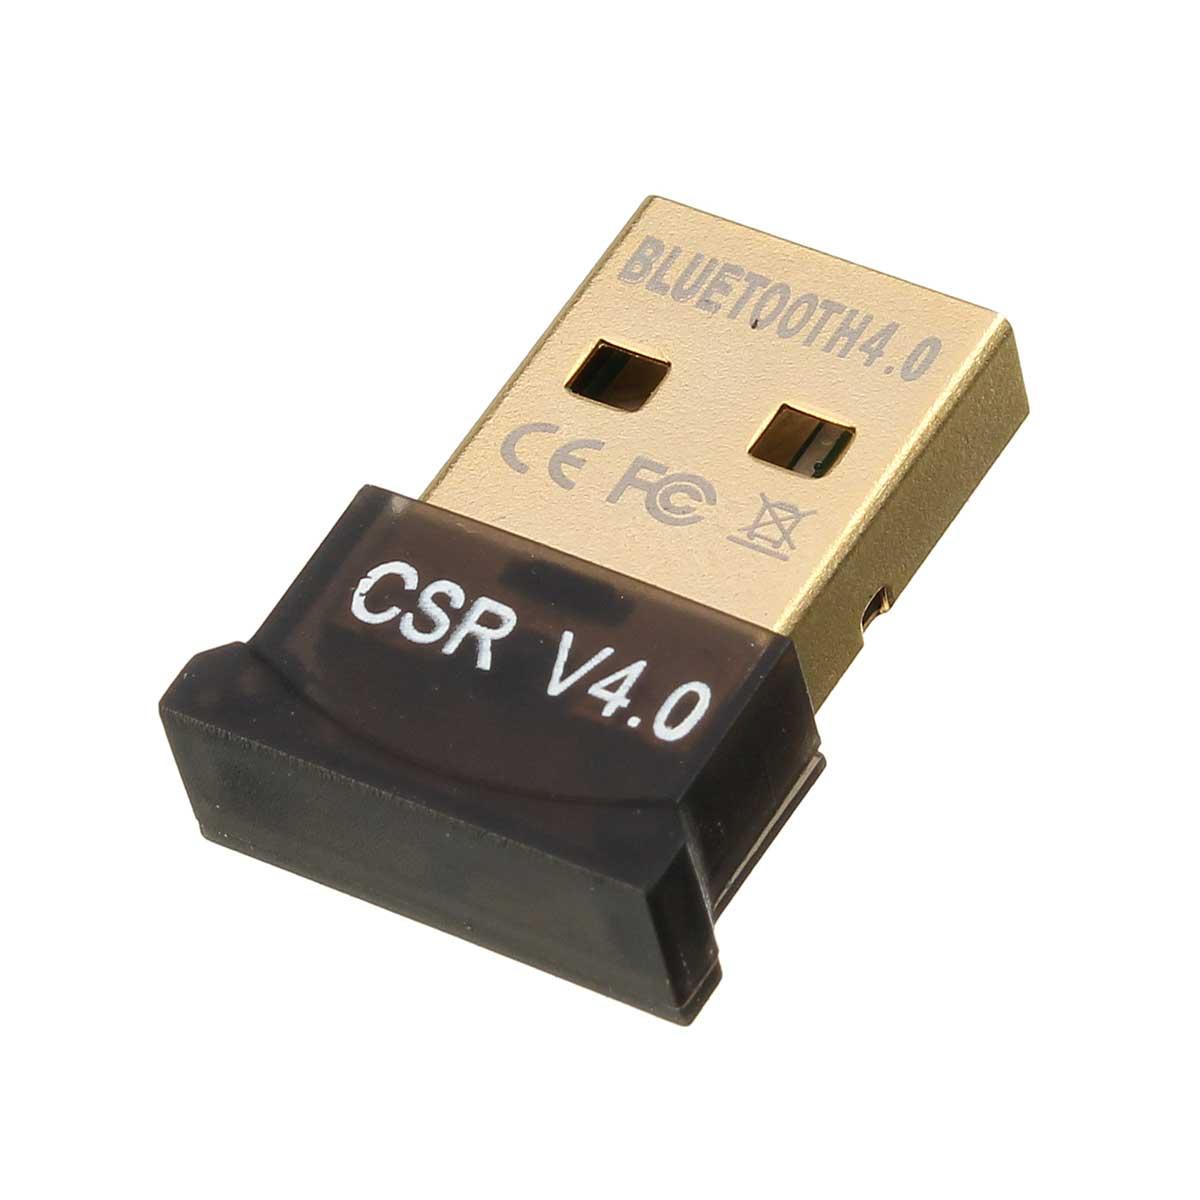 BLUETOOTH ADAPTER USB CSR V4.0  بدون تعريف ,Cable